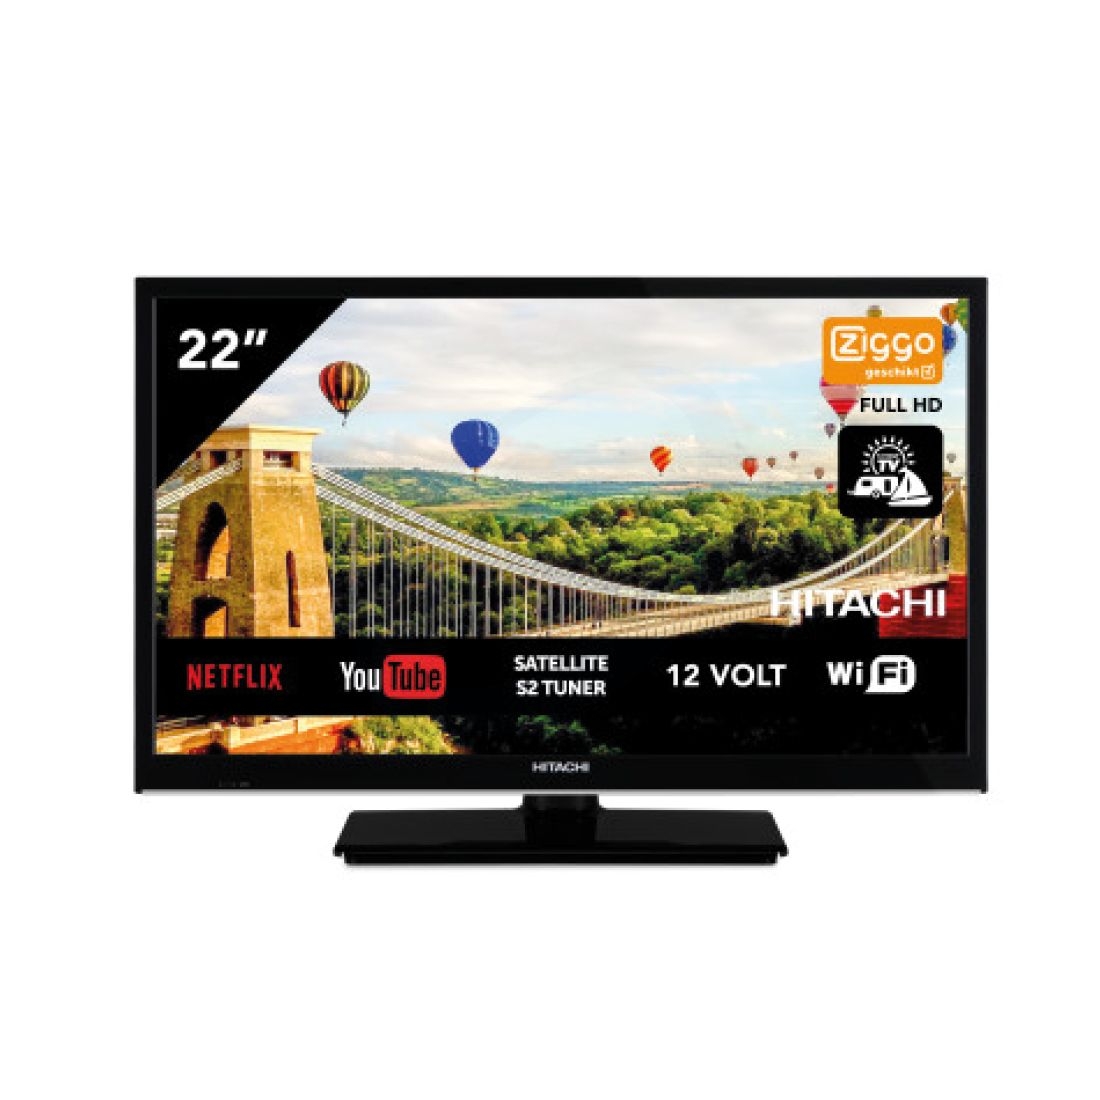 Hitachi 22HE4002 - 22 Zoll - Smart TV - WiFi - 12V - Version 2021